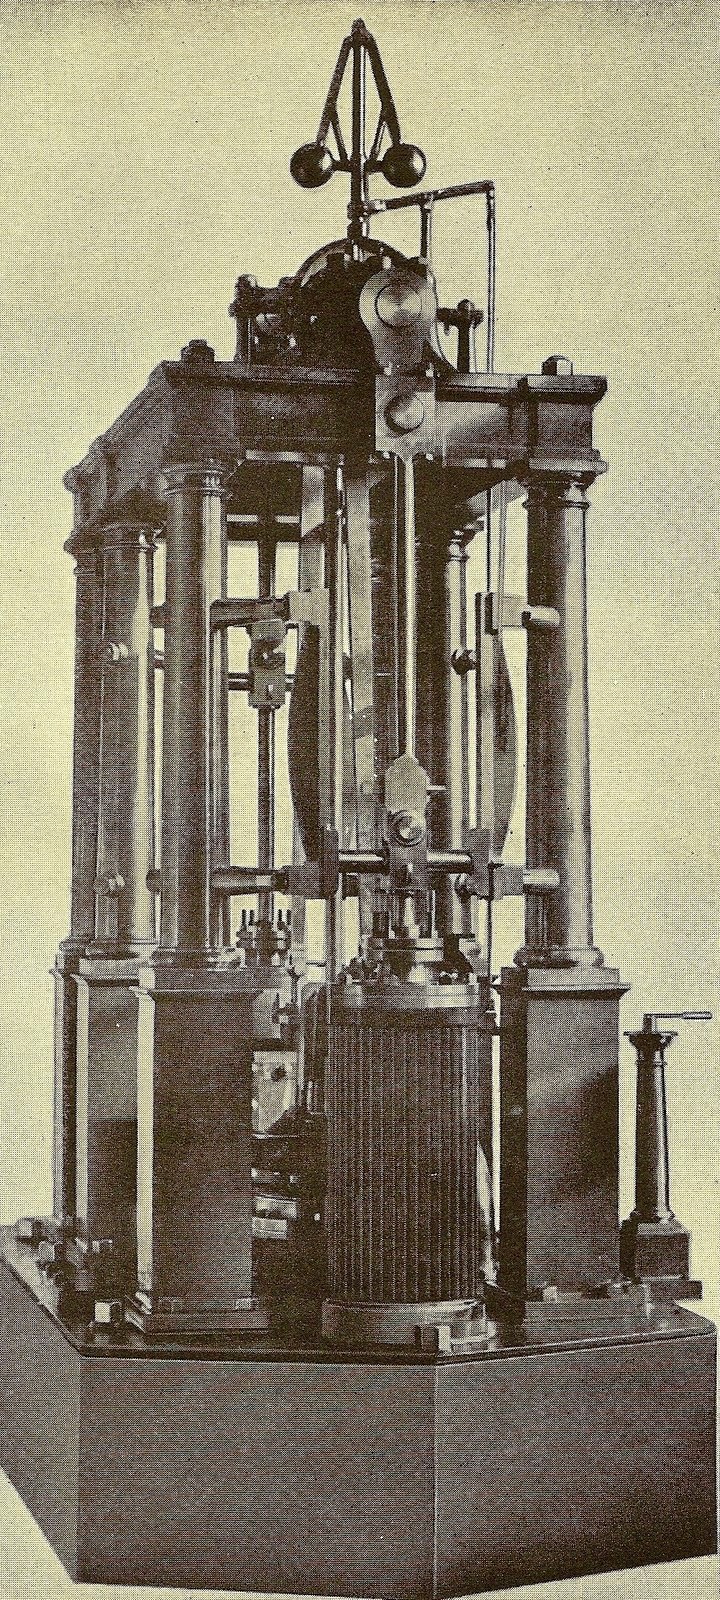 Modelo de máquina de vapor fabricado por William Wain en 1860.jpg